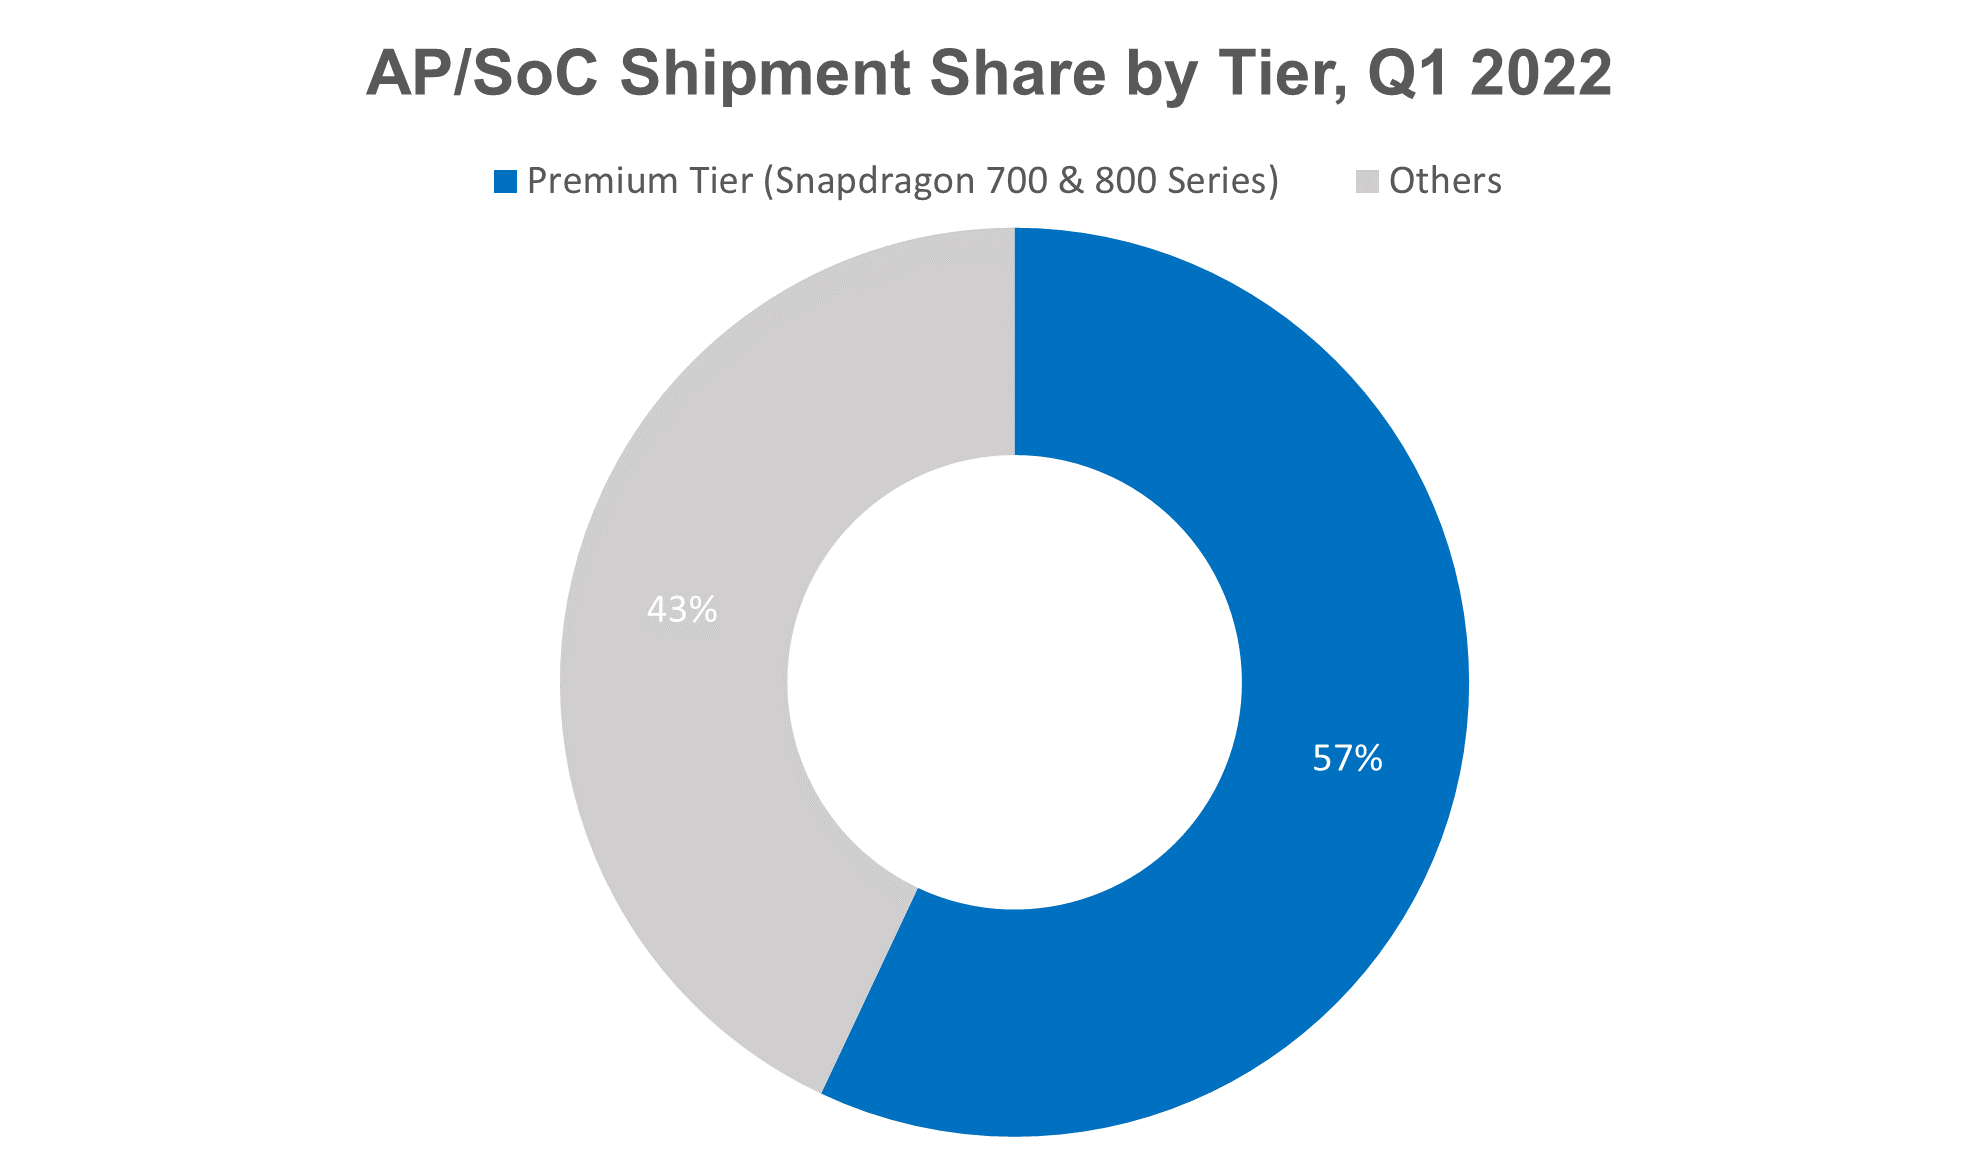 AP SOC Shipment share by Tier Q1 2022